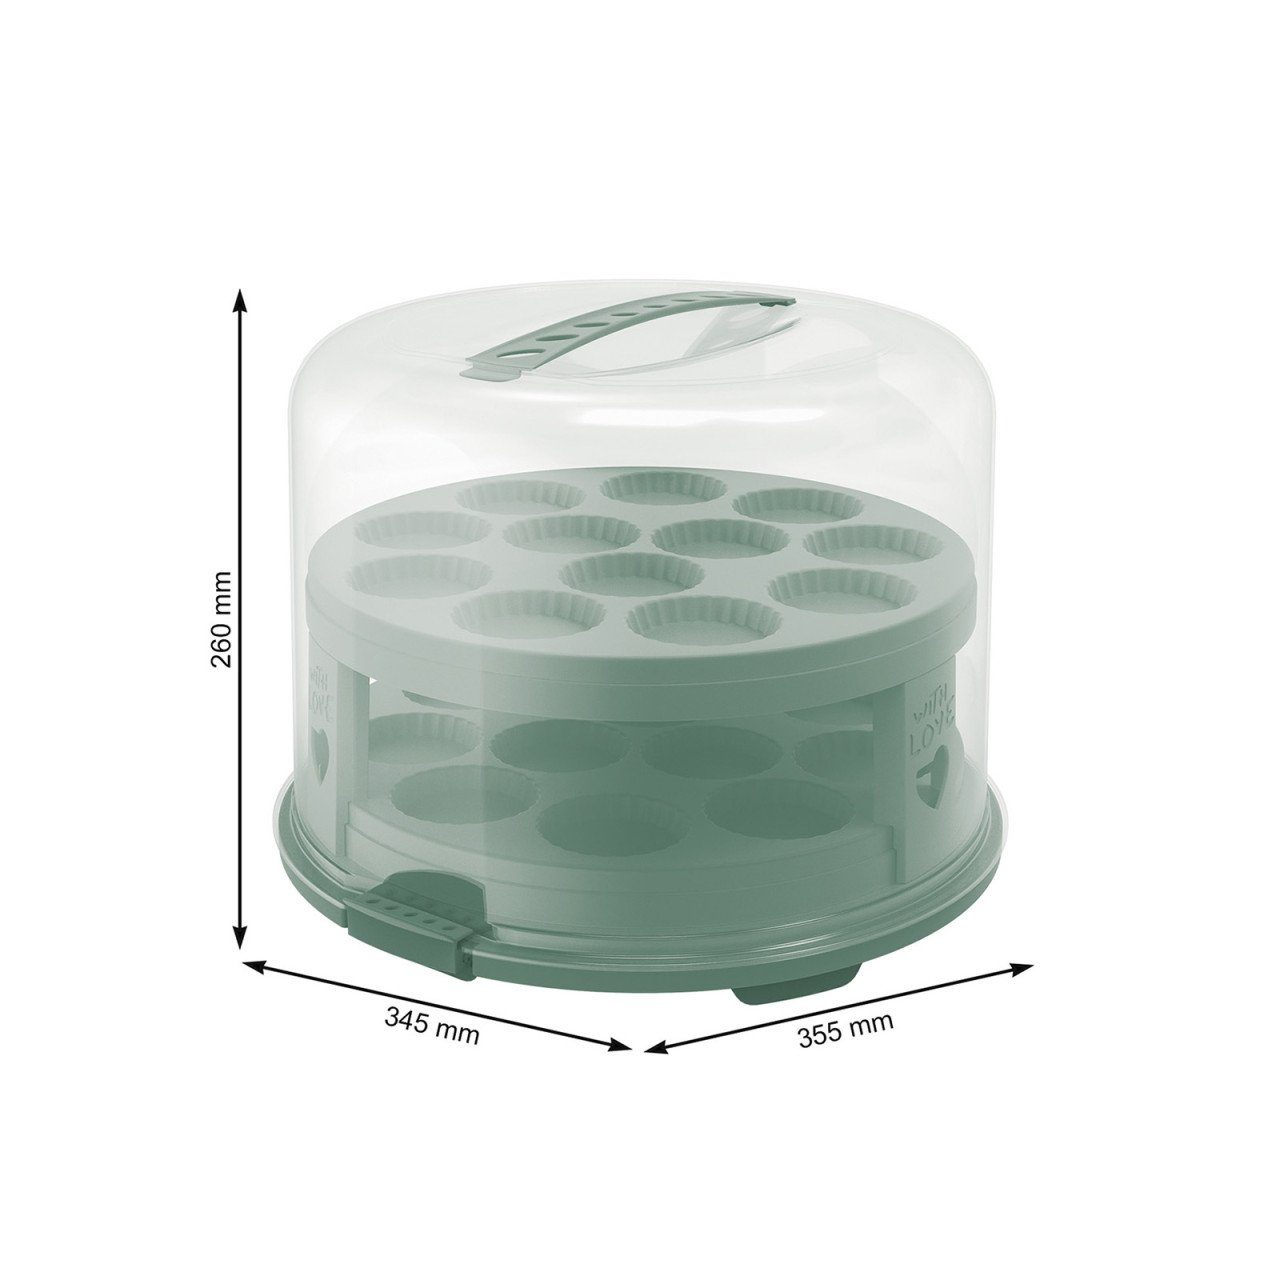 XL cm ROTHO Rotho Backblech / Transparent Mistletoe Fresh Kunststoff mit Tortenglocke inkl., grün 26 Trays